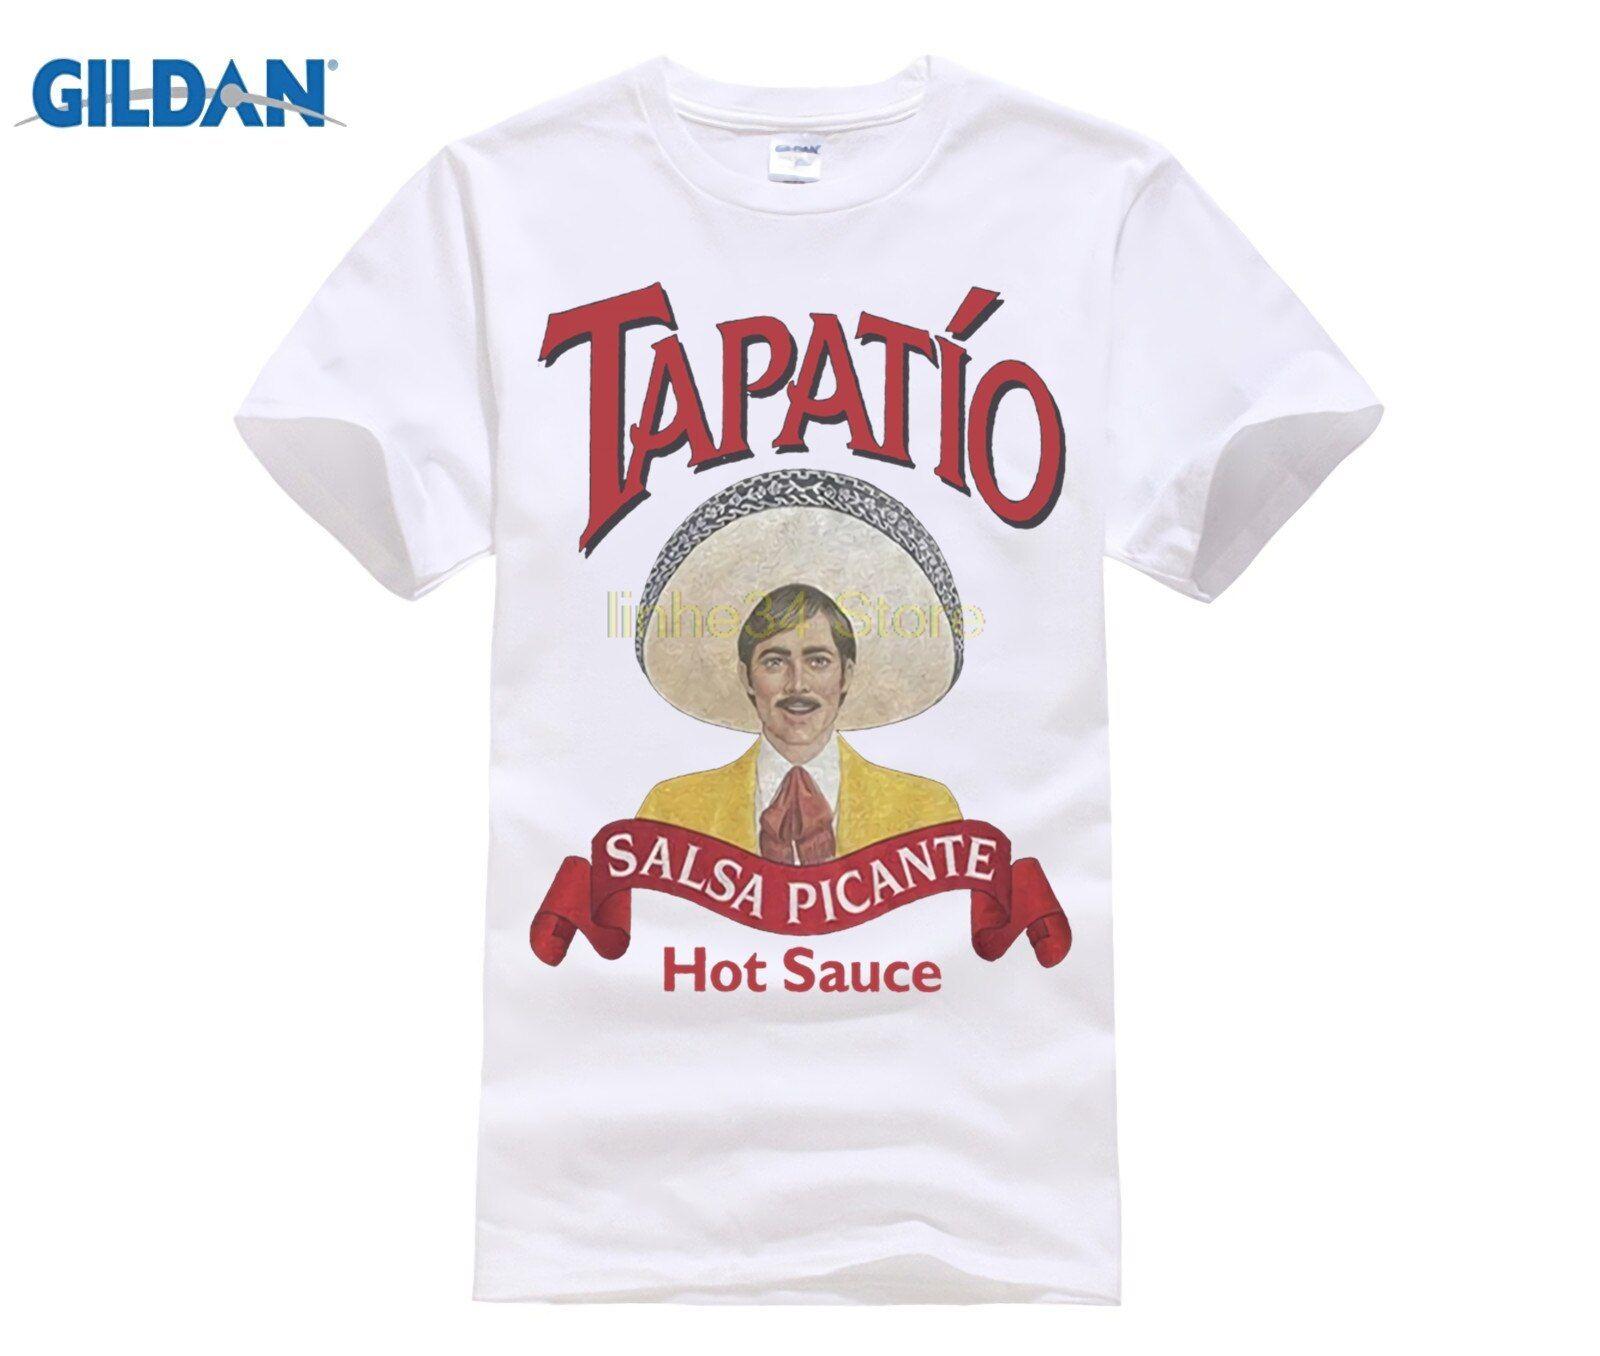 Tapatio Logo - US $11.99 |Gildan Tapatio Salsa Picante Original Logo Mens Graphic T  Shirt-in T-Shirts from Men's Clothing on Aliexpress.com | Alibaba Group